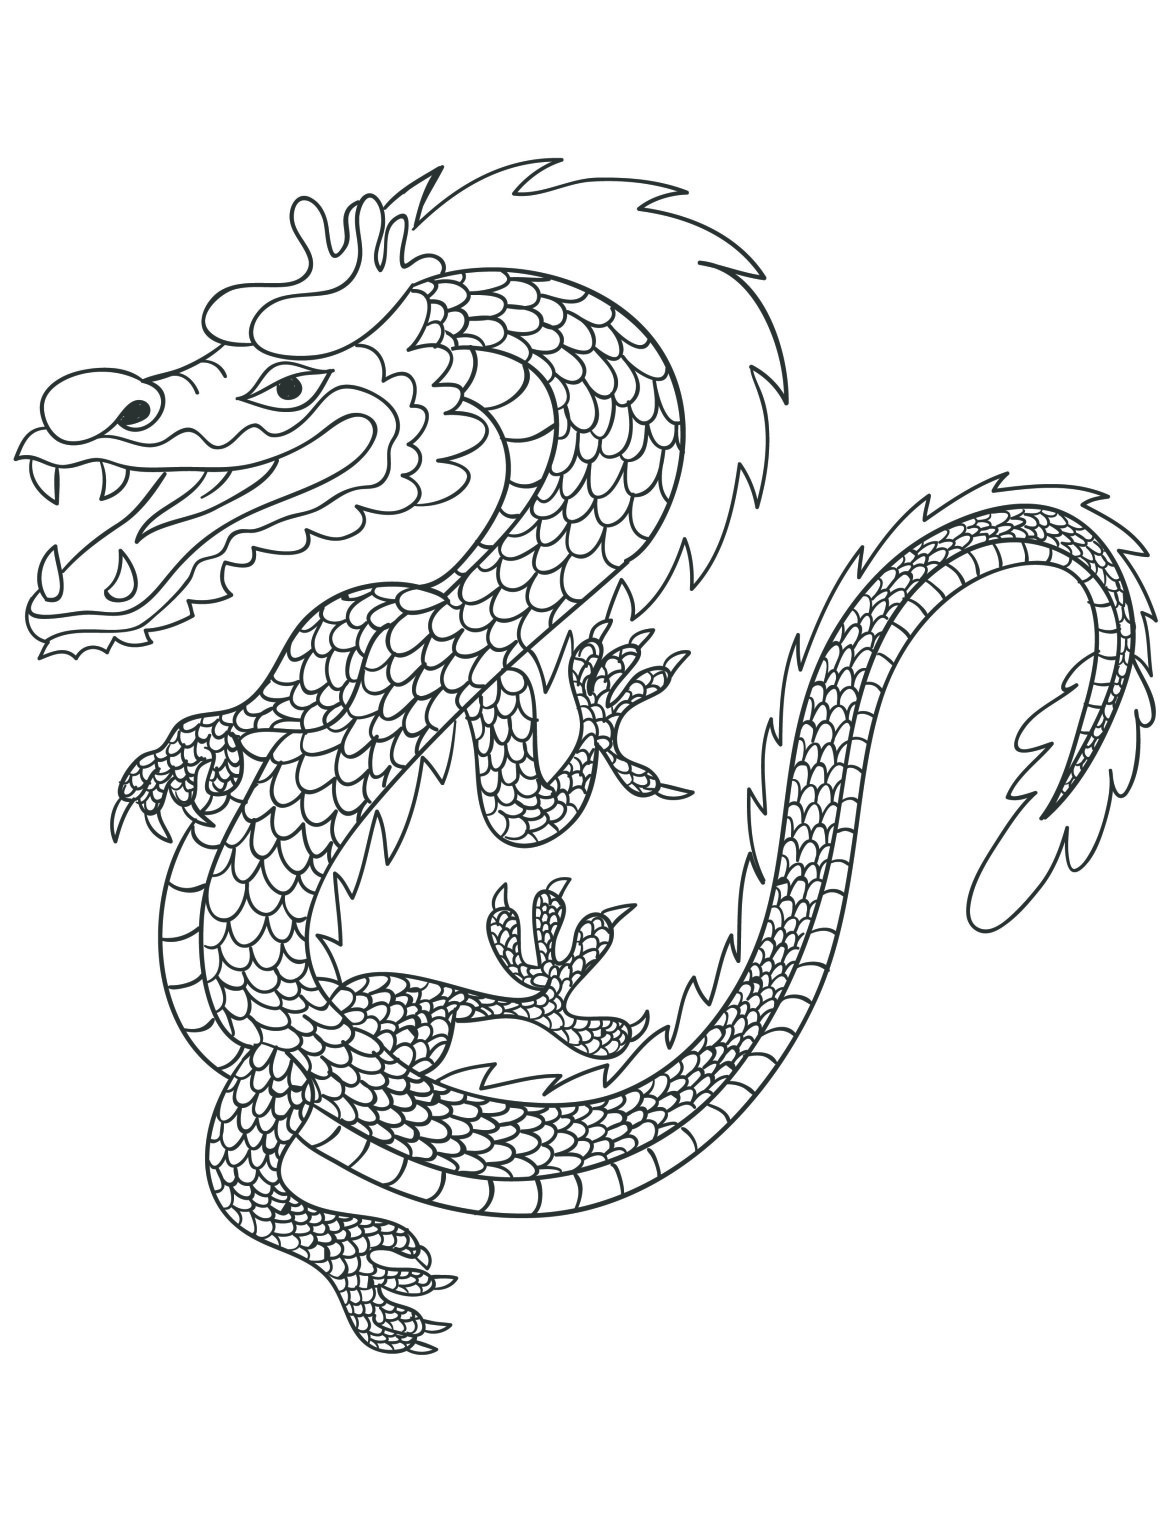 Dragon Chinois Coloriage Inspiration Danse Dragon Chinois Coloriage Pour Adulte Artherapie